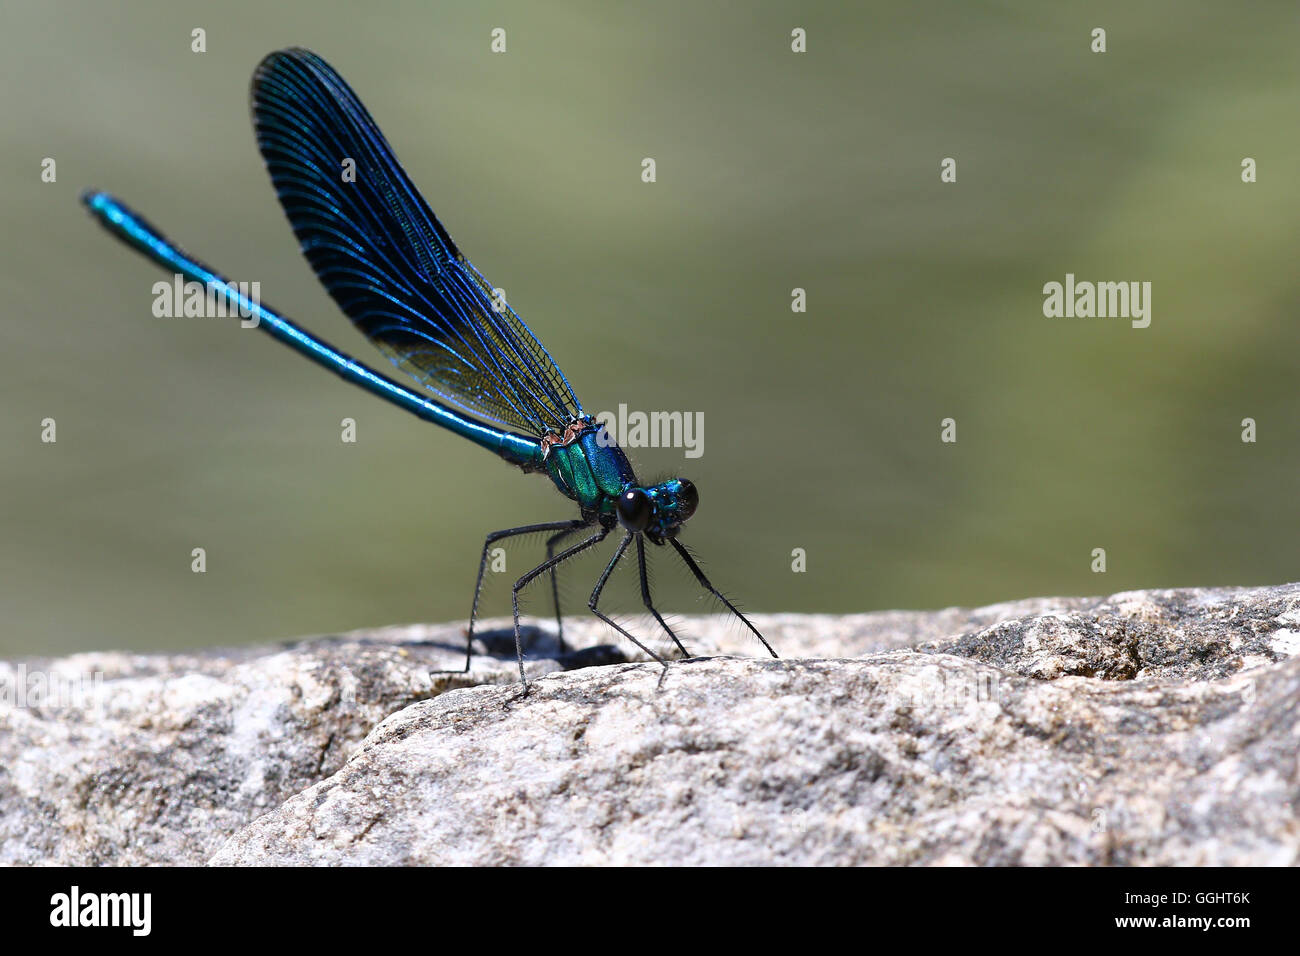 Damsel dragonfly, Calopteryx Virgo, sunbathing on a rock by a pond Stock Photo